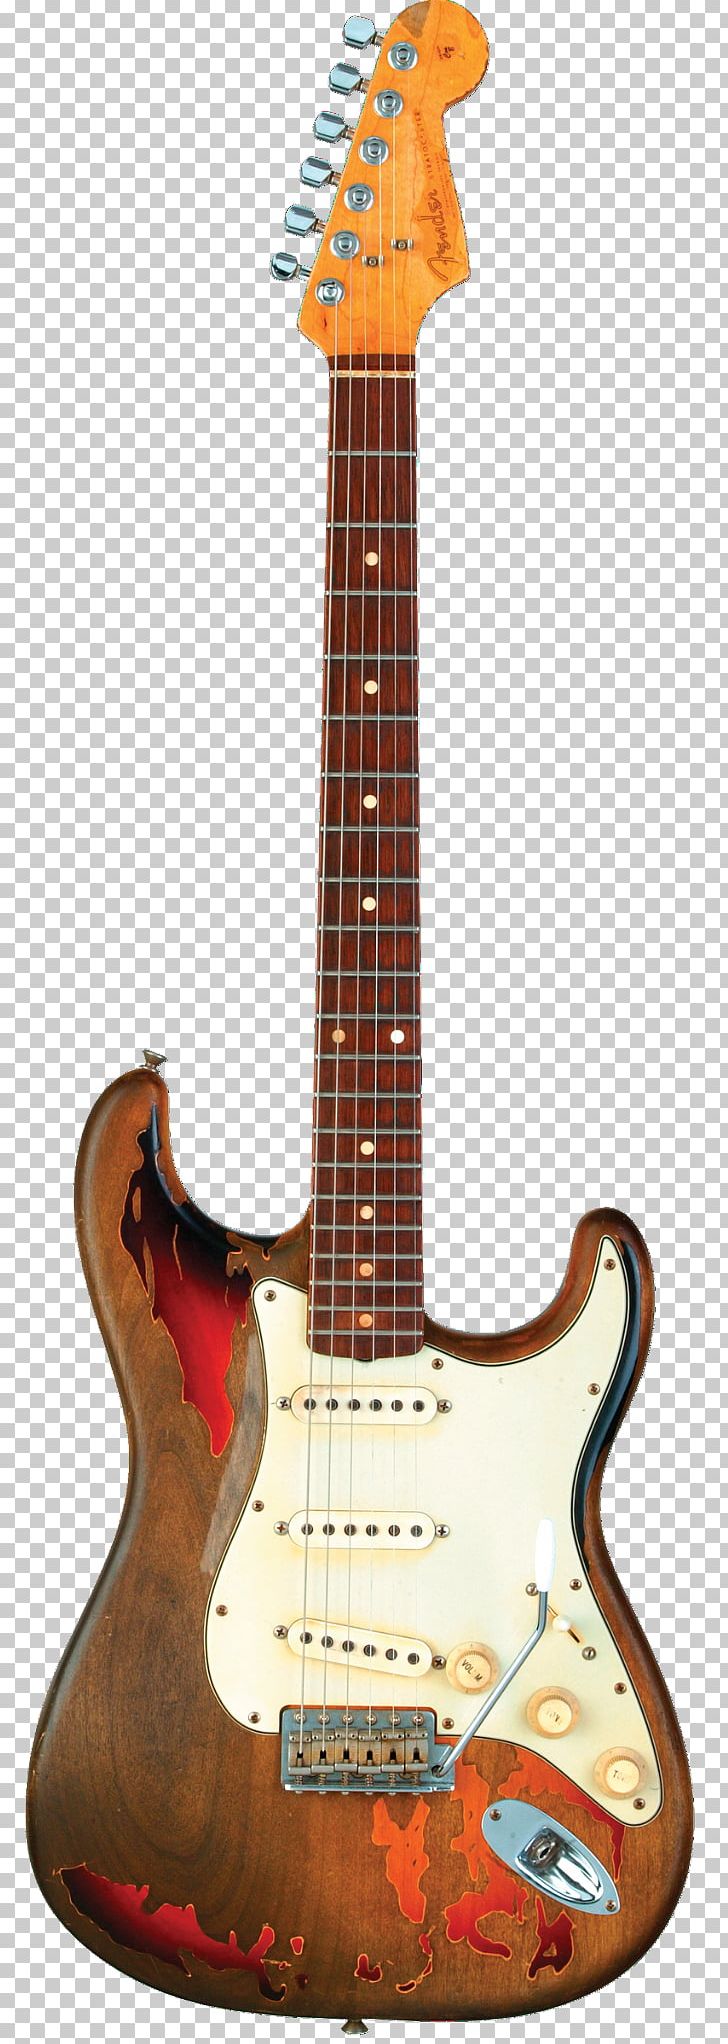 Fender Stratocaster Fender Musical Instruments Corporation Electric Guitar Sunburst PNG, Clipart,  Free PNG Download